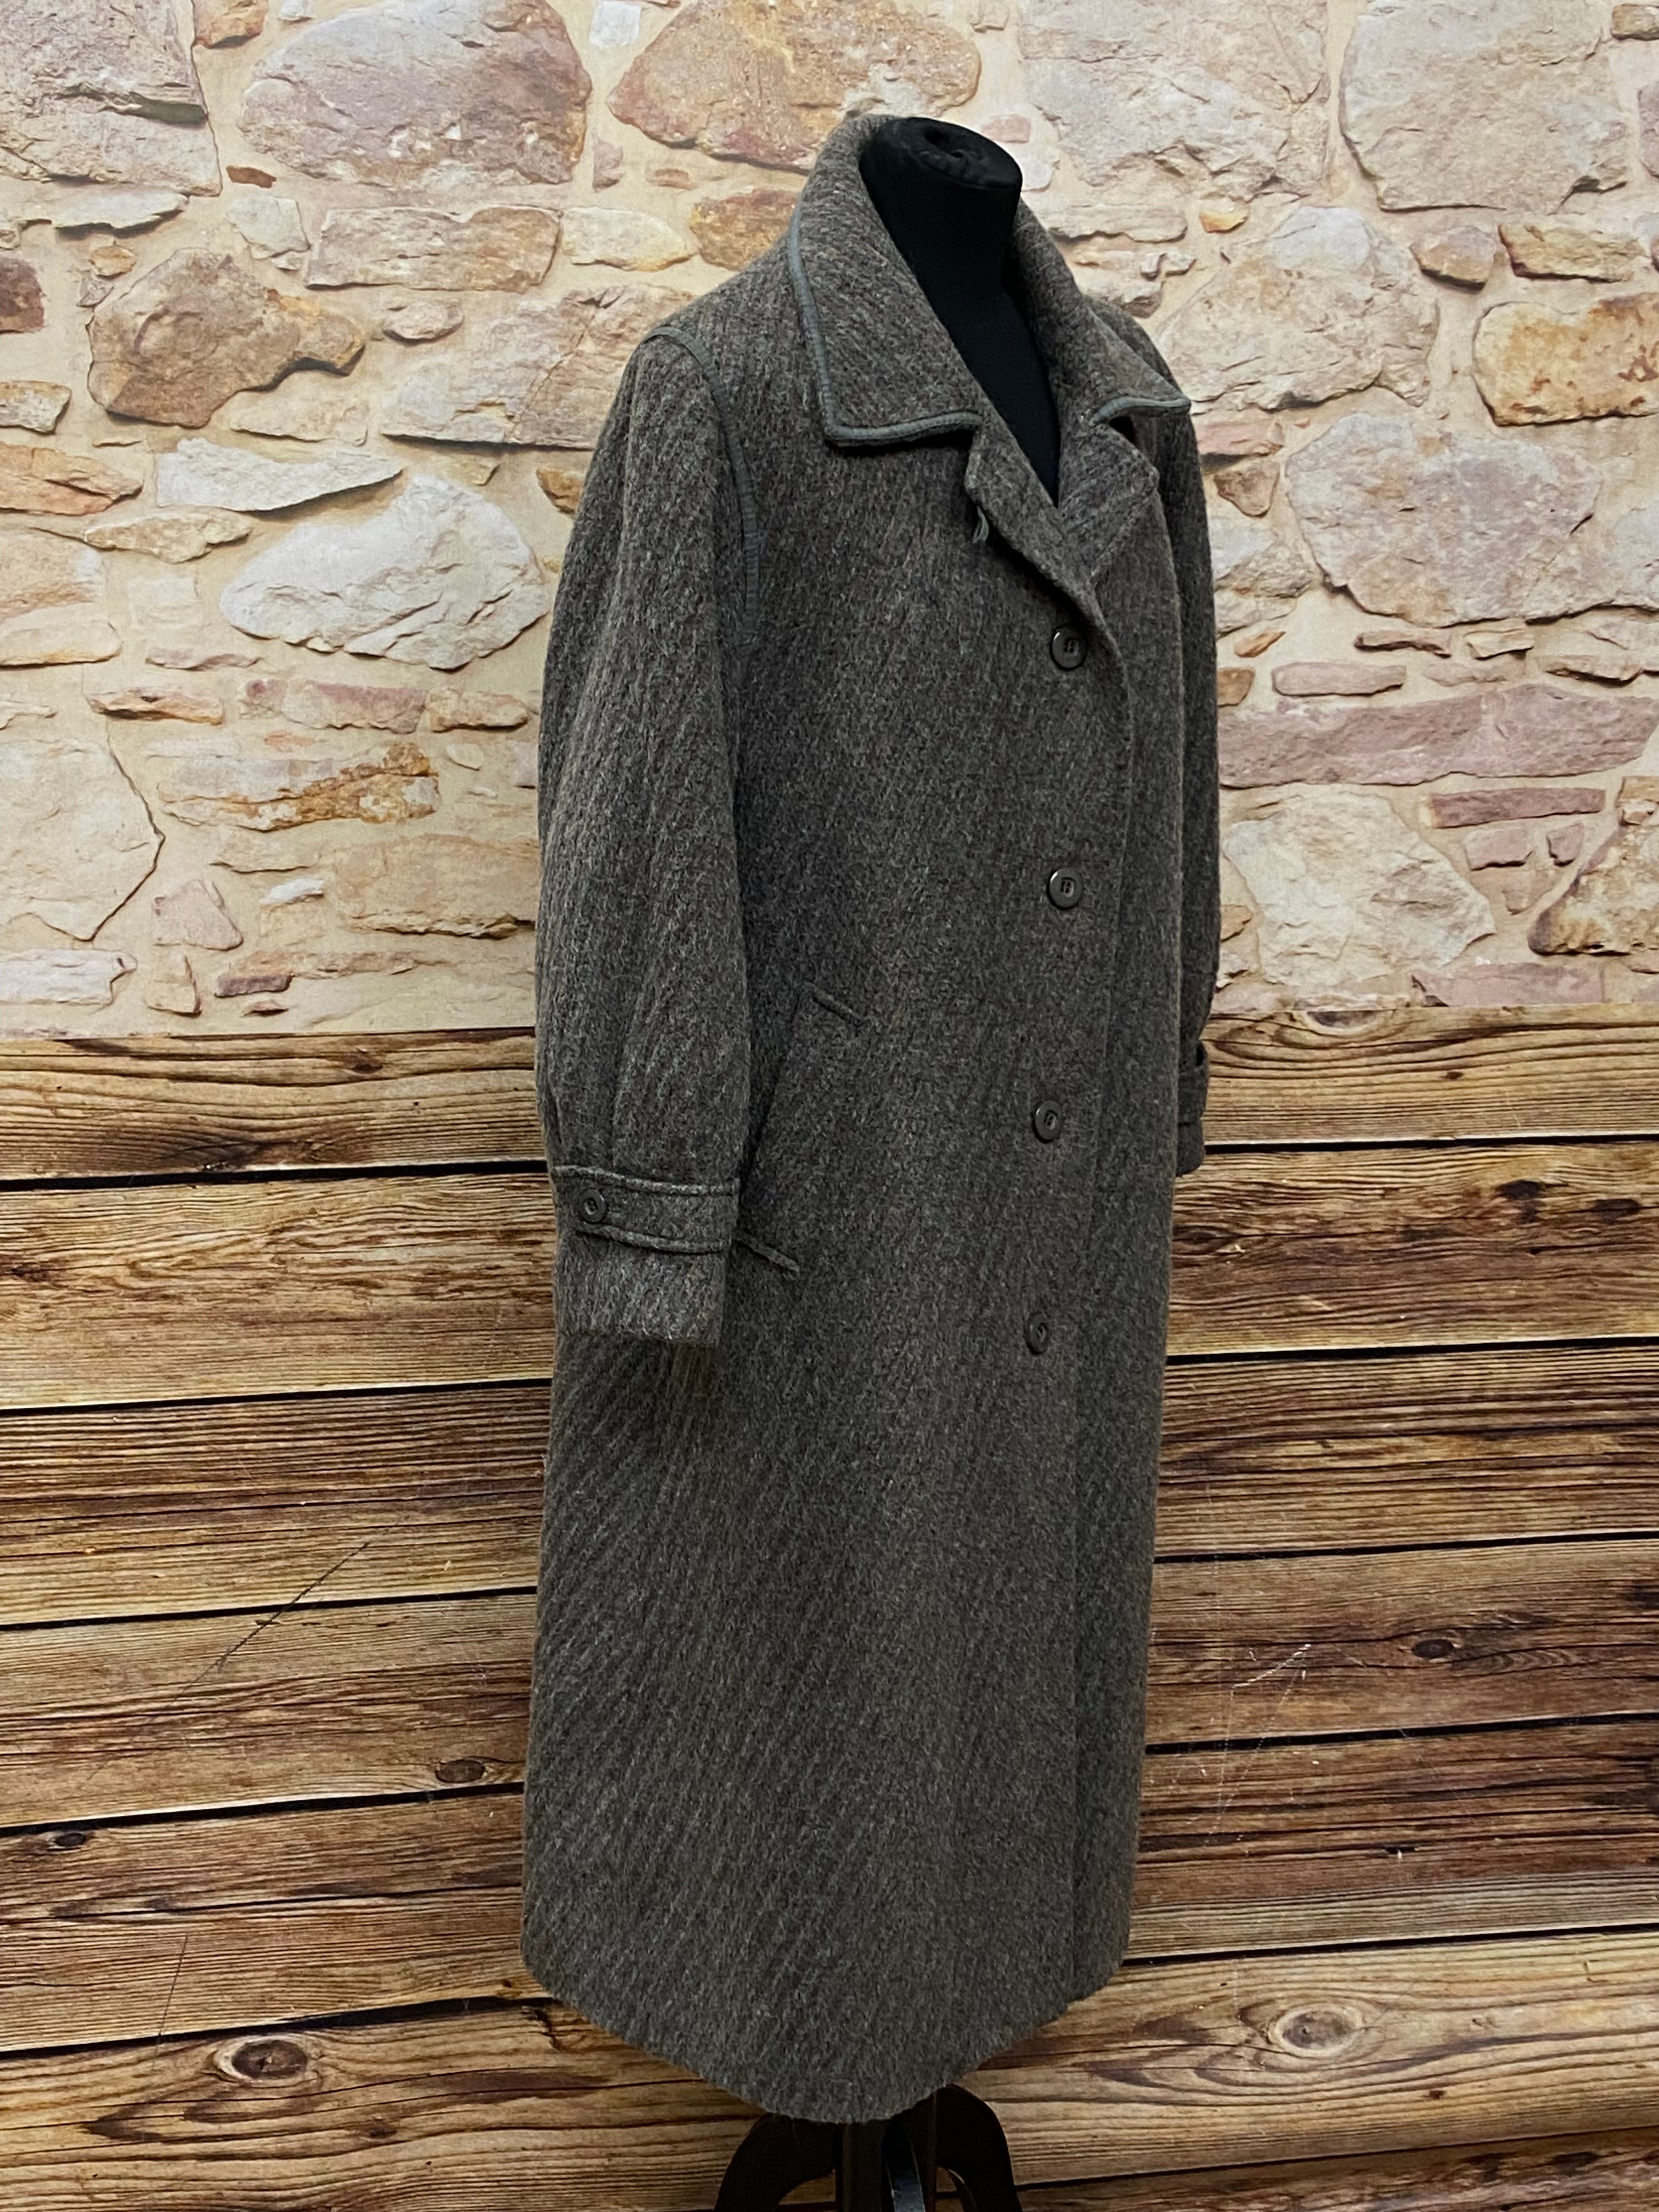 Vintage Mantel im 20er Jahre Stil Damenmantel grau Gr.38-42